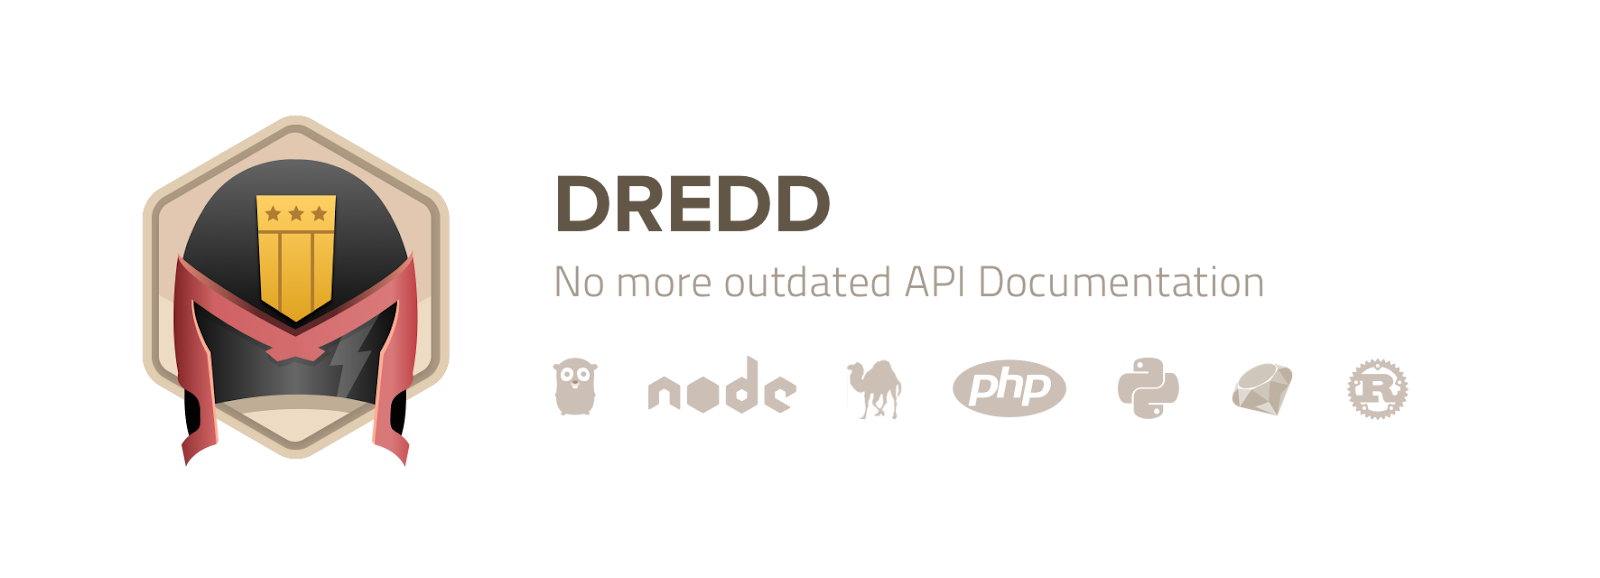 API testing tools, Dredd